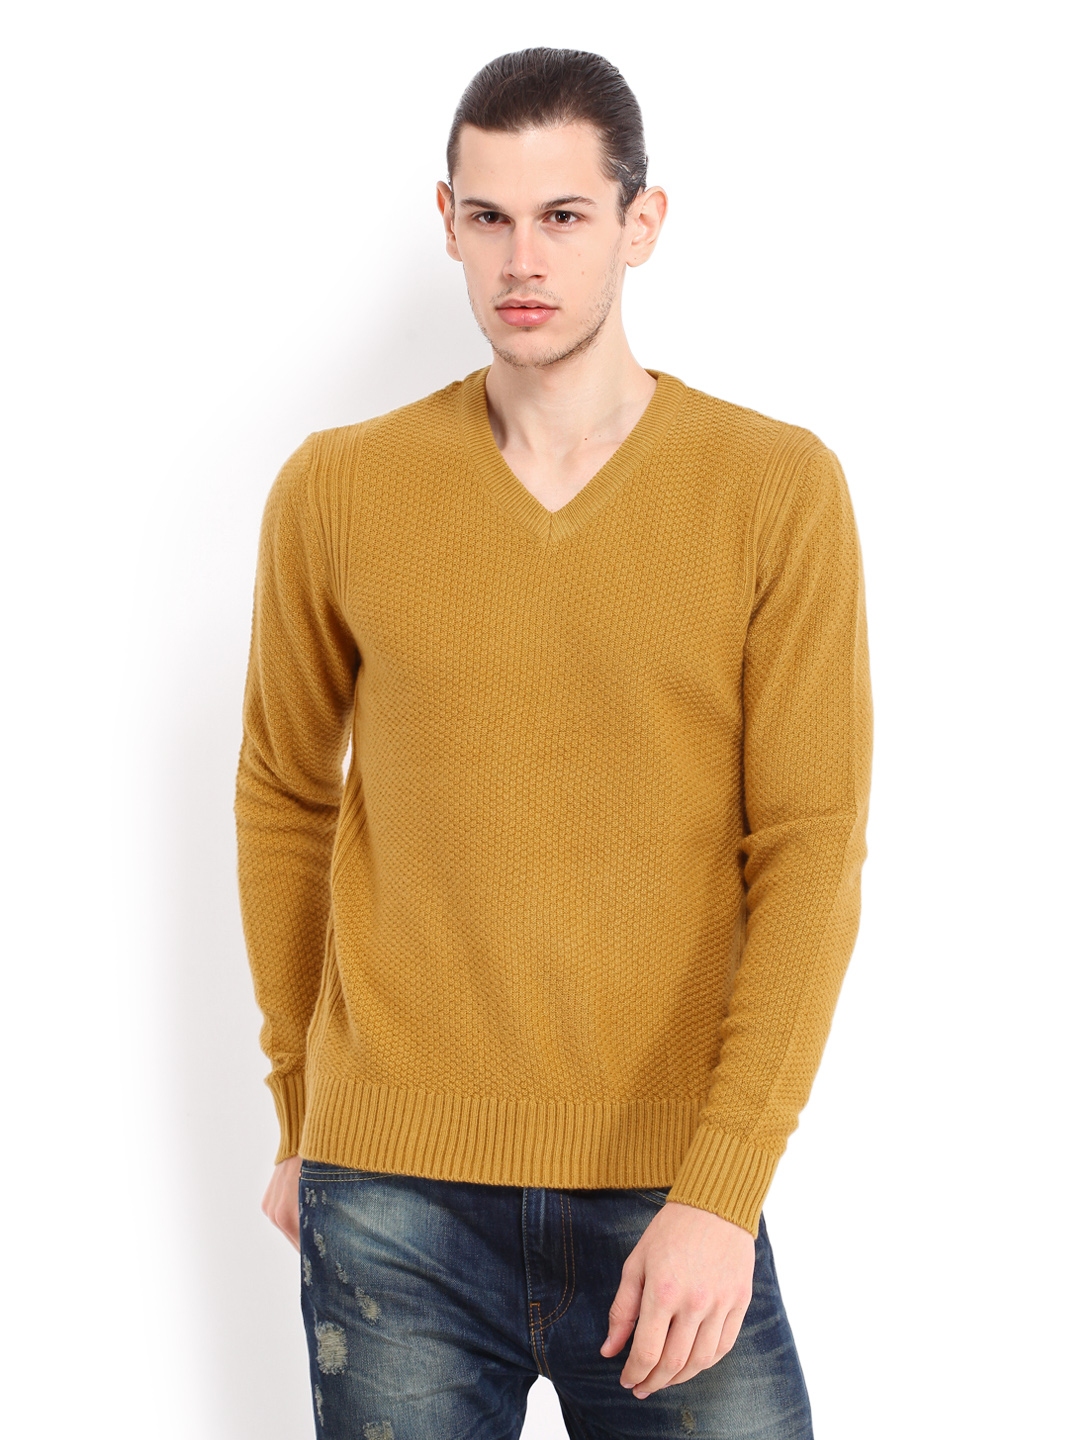 Mustard yellow long cardigan sweater men penney